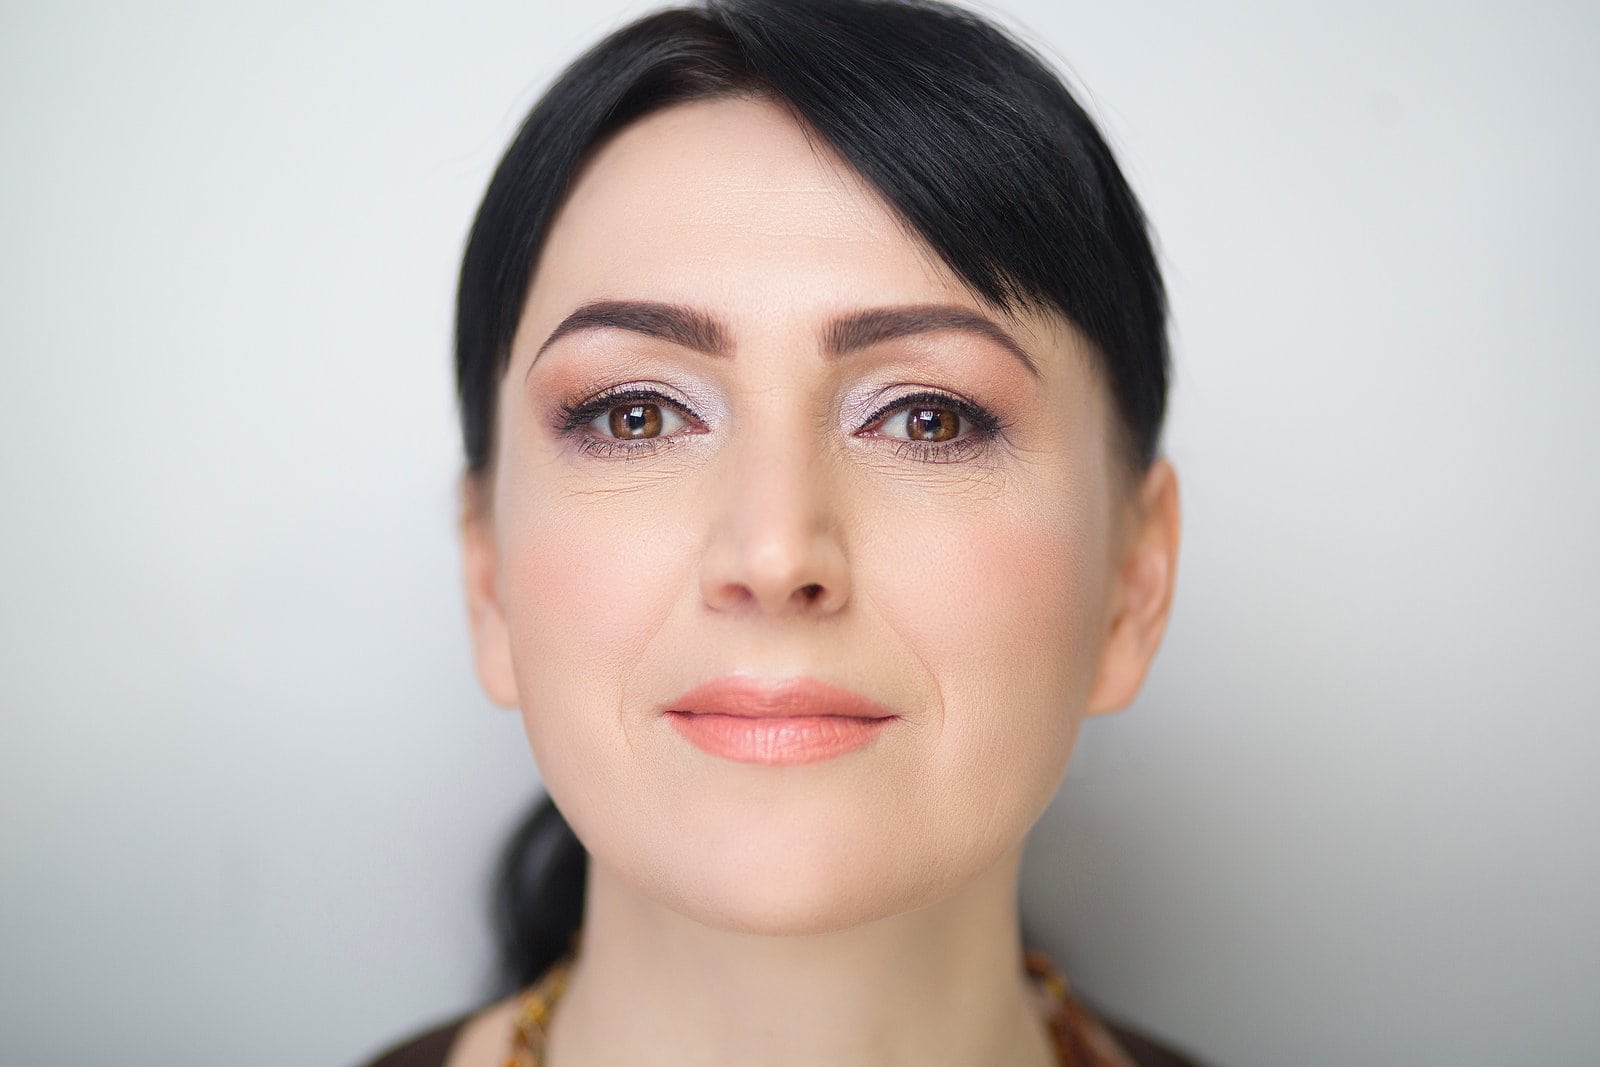 Gen X woman - Microblading eyebrows